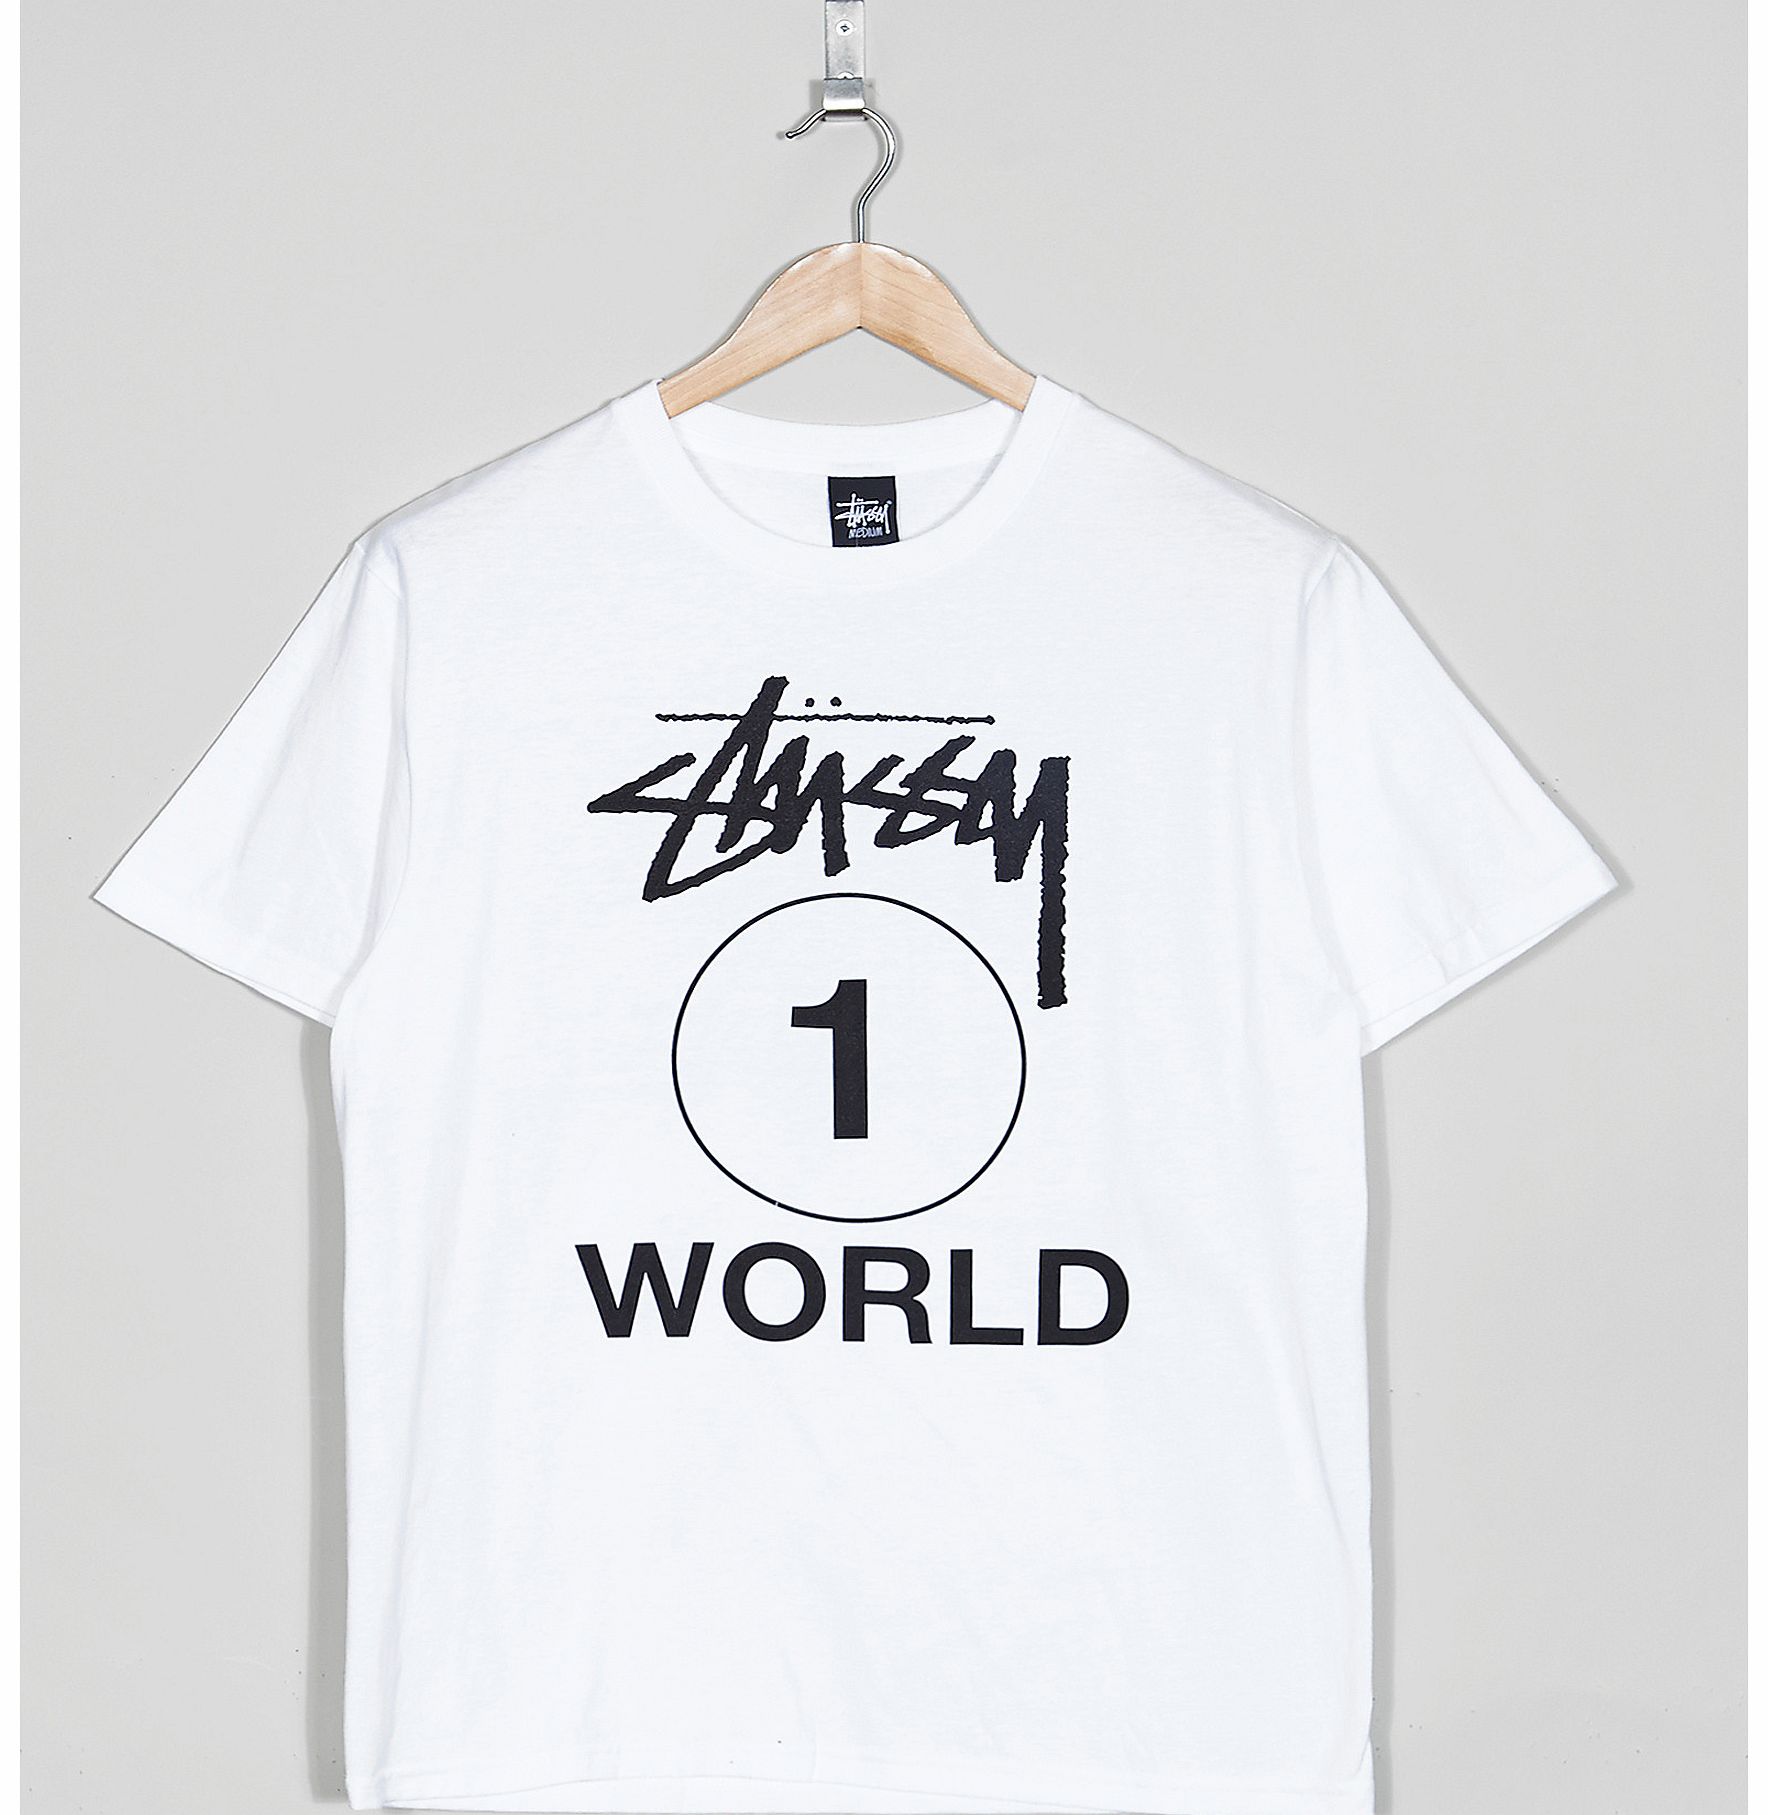 One World T-Shirt